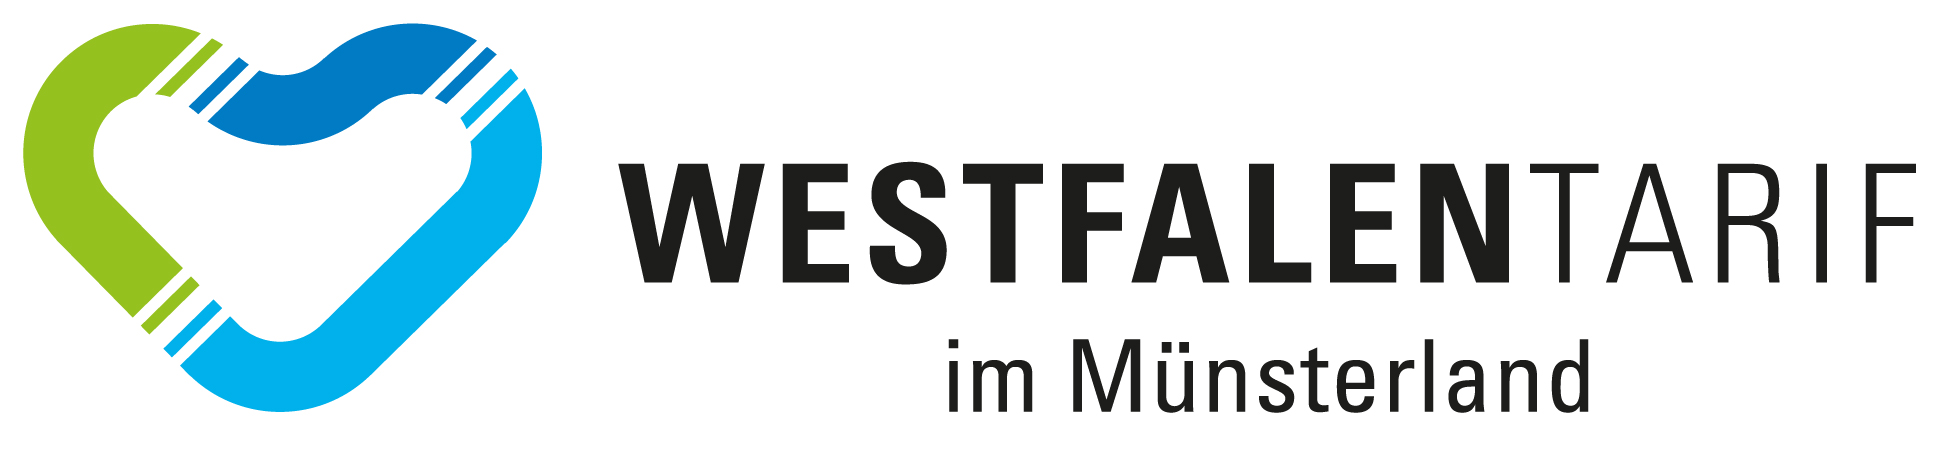 WestfalenTarif_Logo_Muensterland_RGB_4-2017_RZ